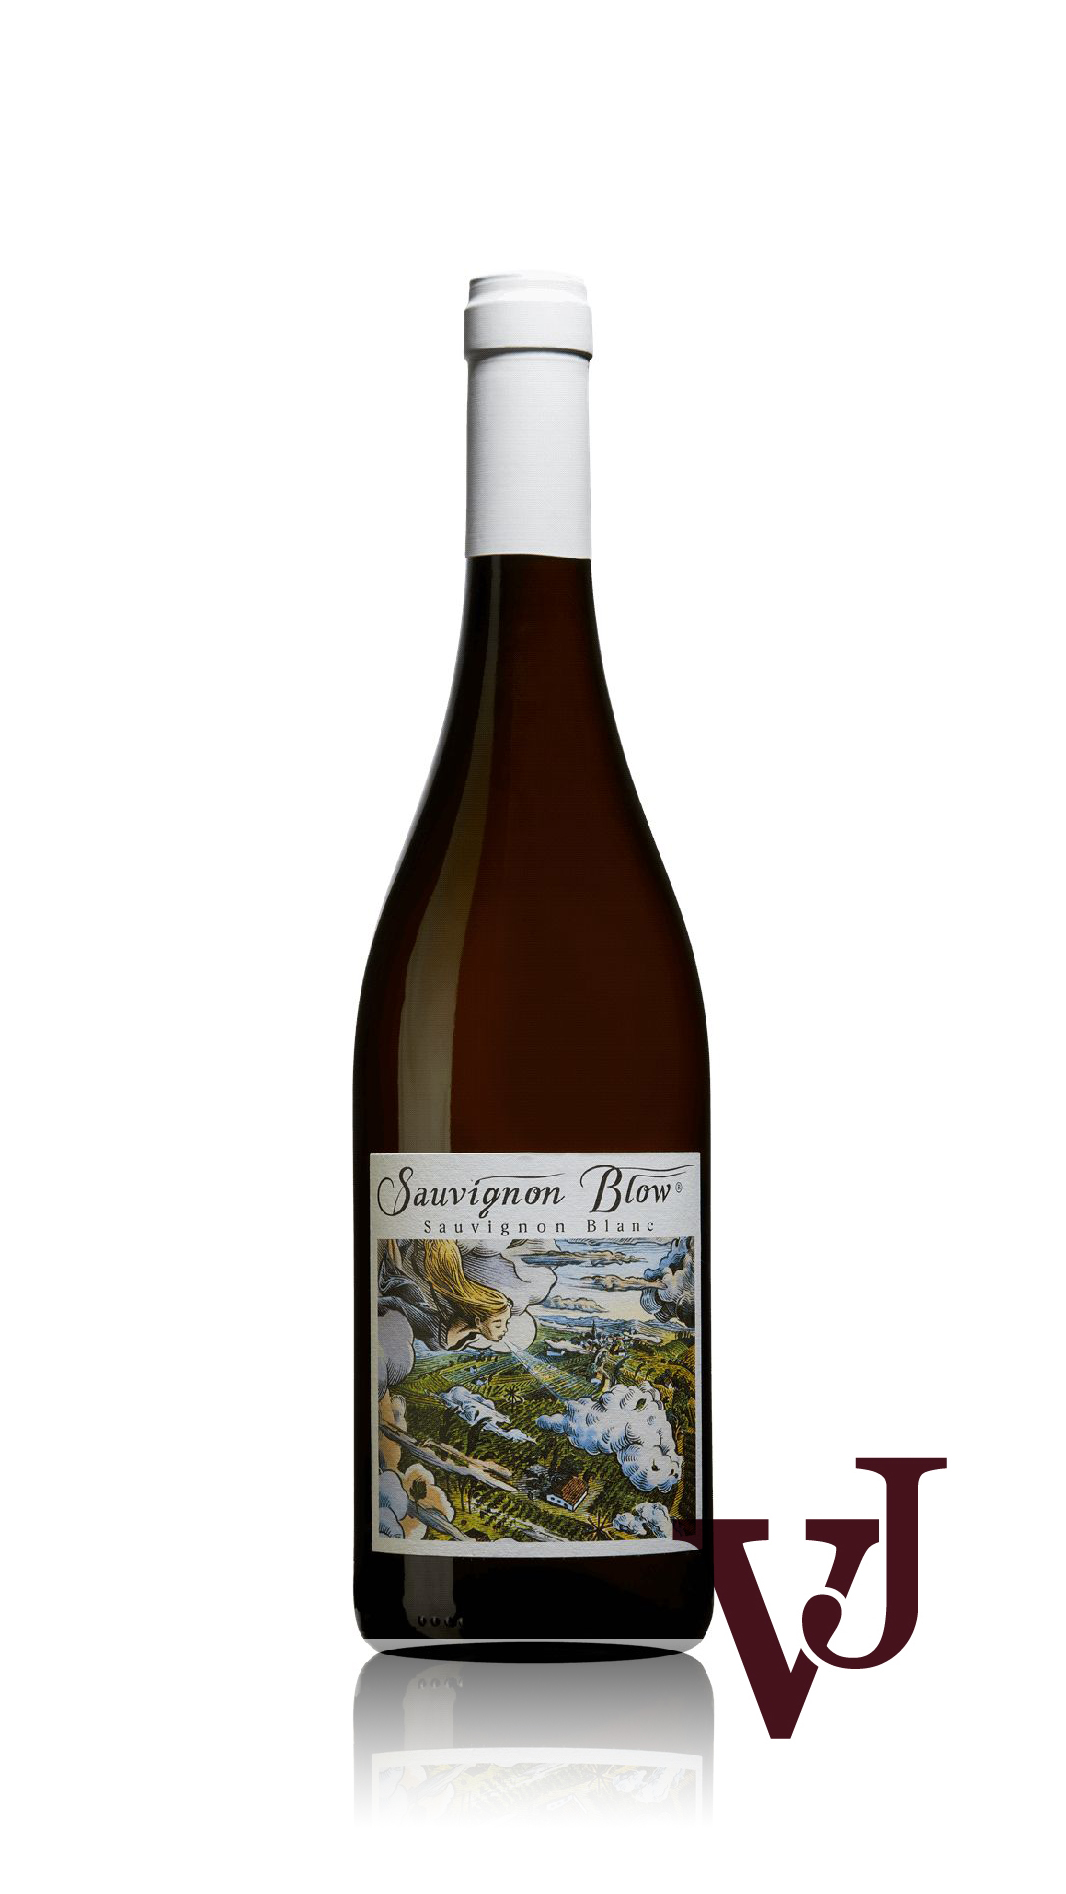 Vitt Vin - Sauvignon Blow Sauvignon blanc 2021 artikel nummer 9047801 från producenten Weingut Lackner-Tinnacher från Österrike.